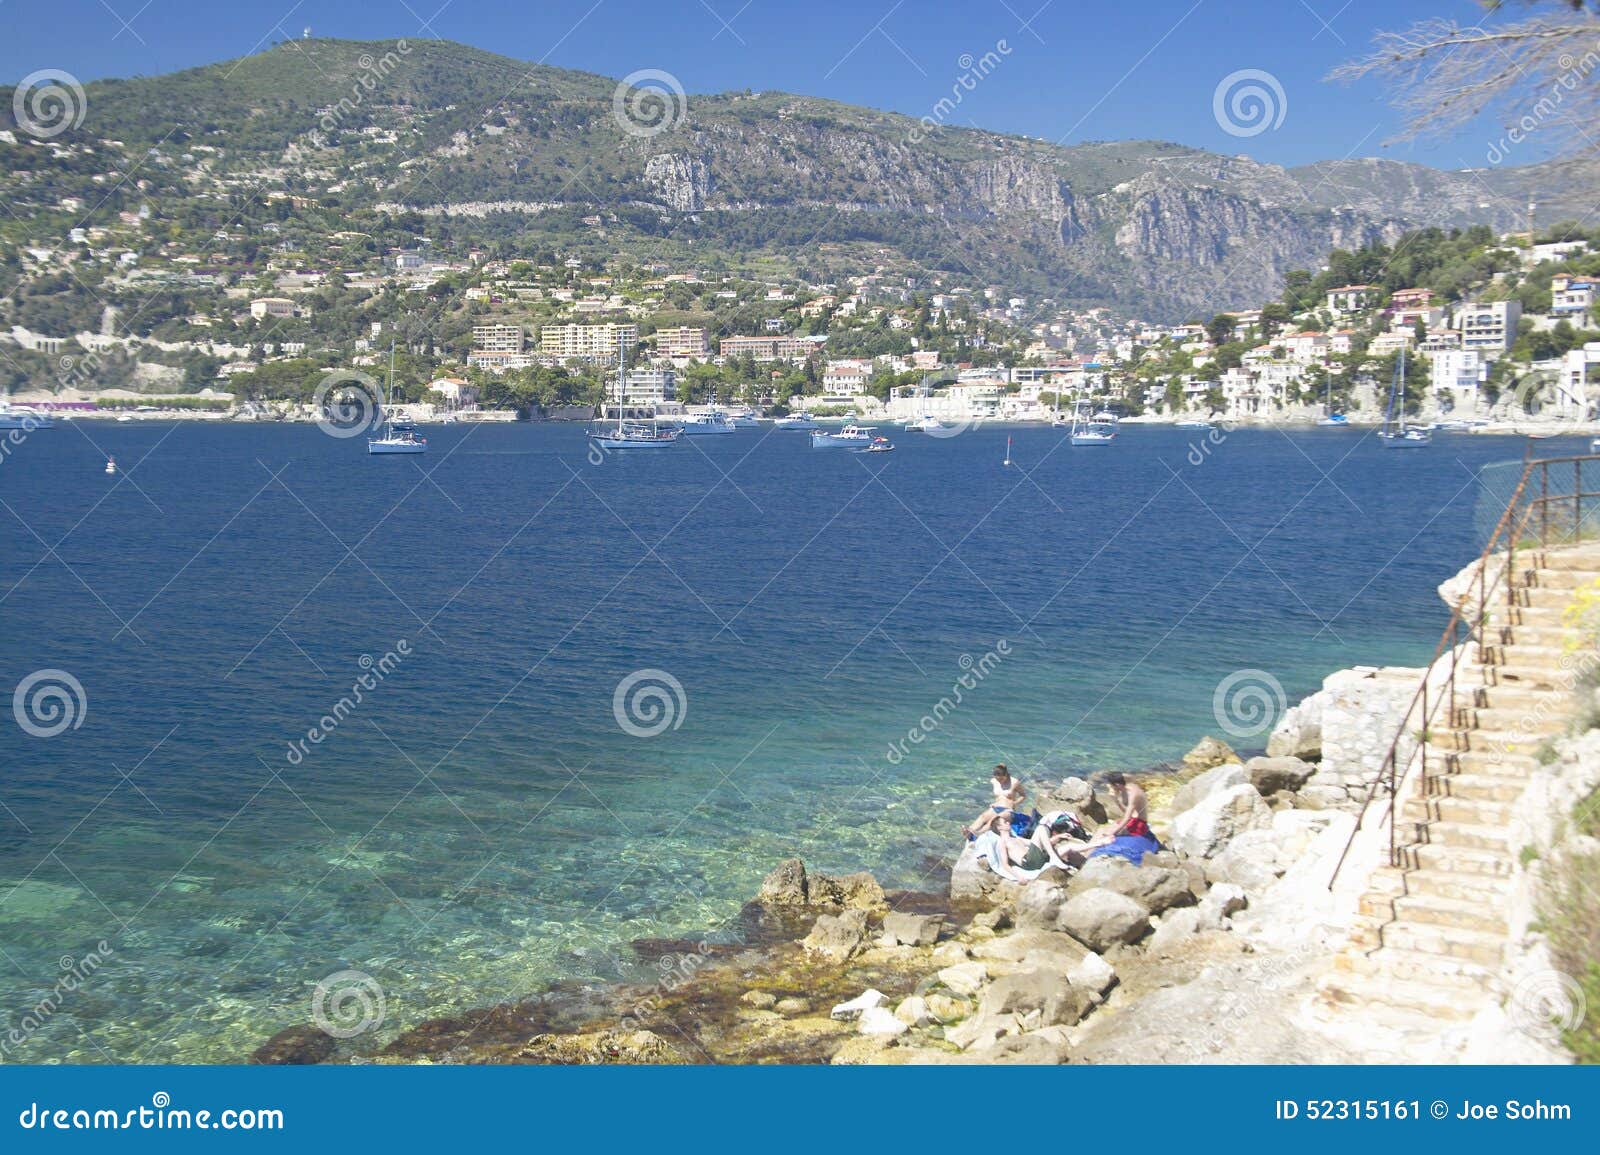 Sunbathers on beach on French Riviera France Stock Photo 